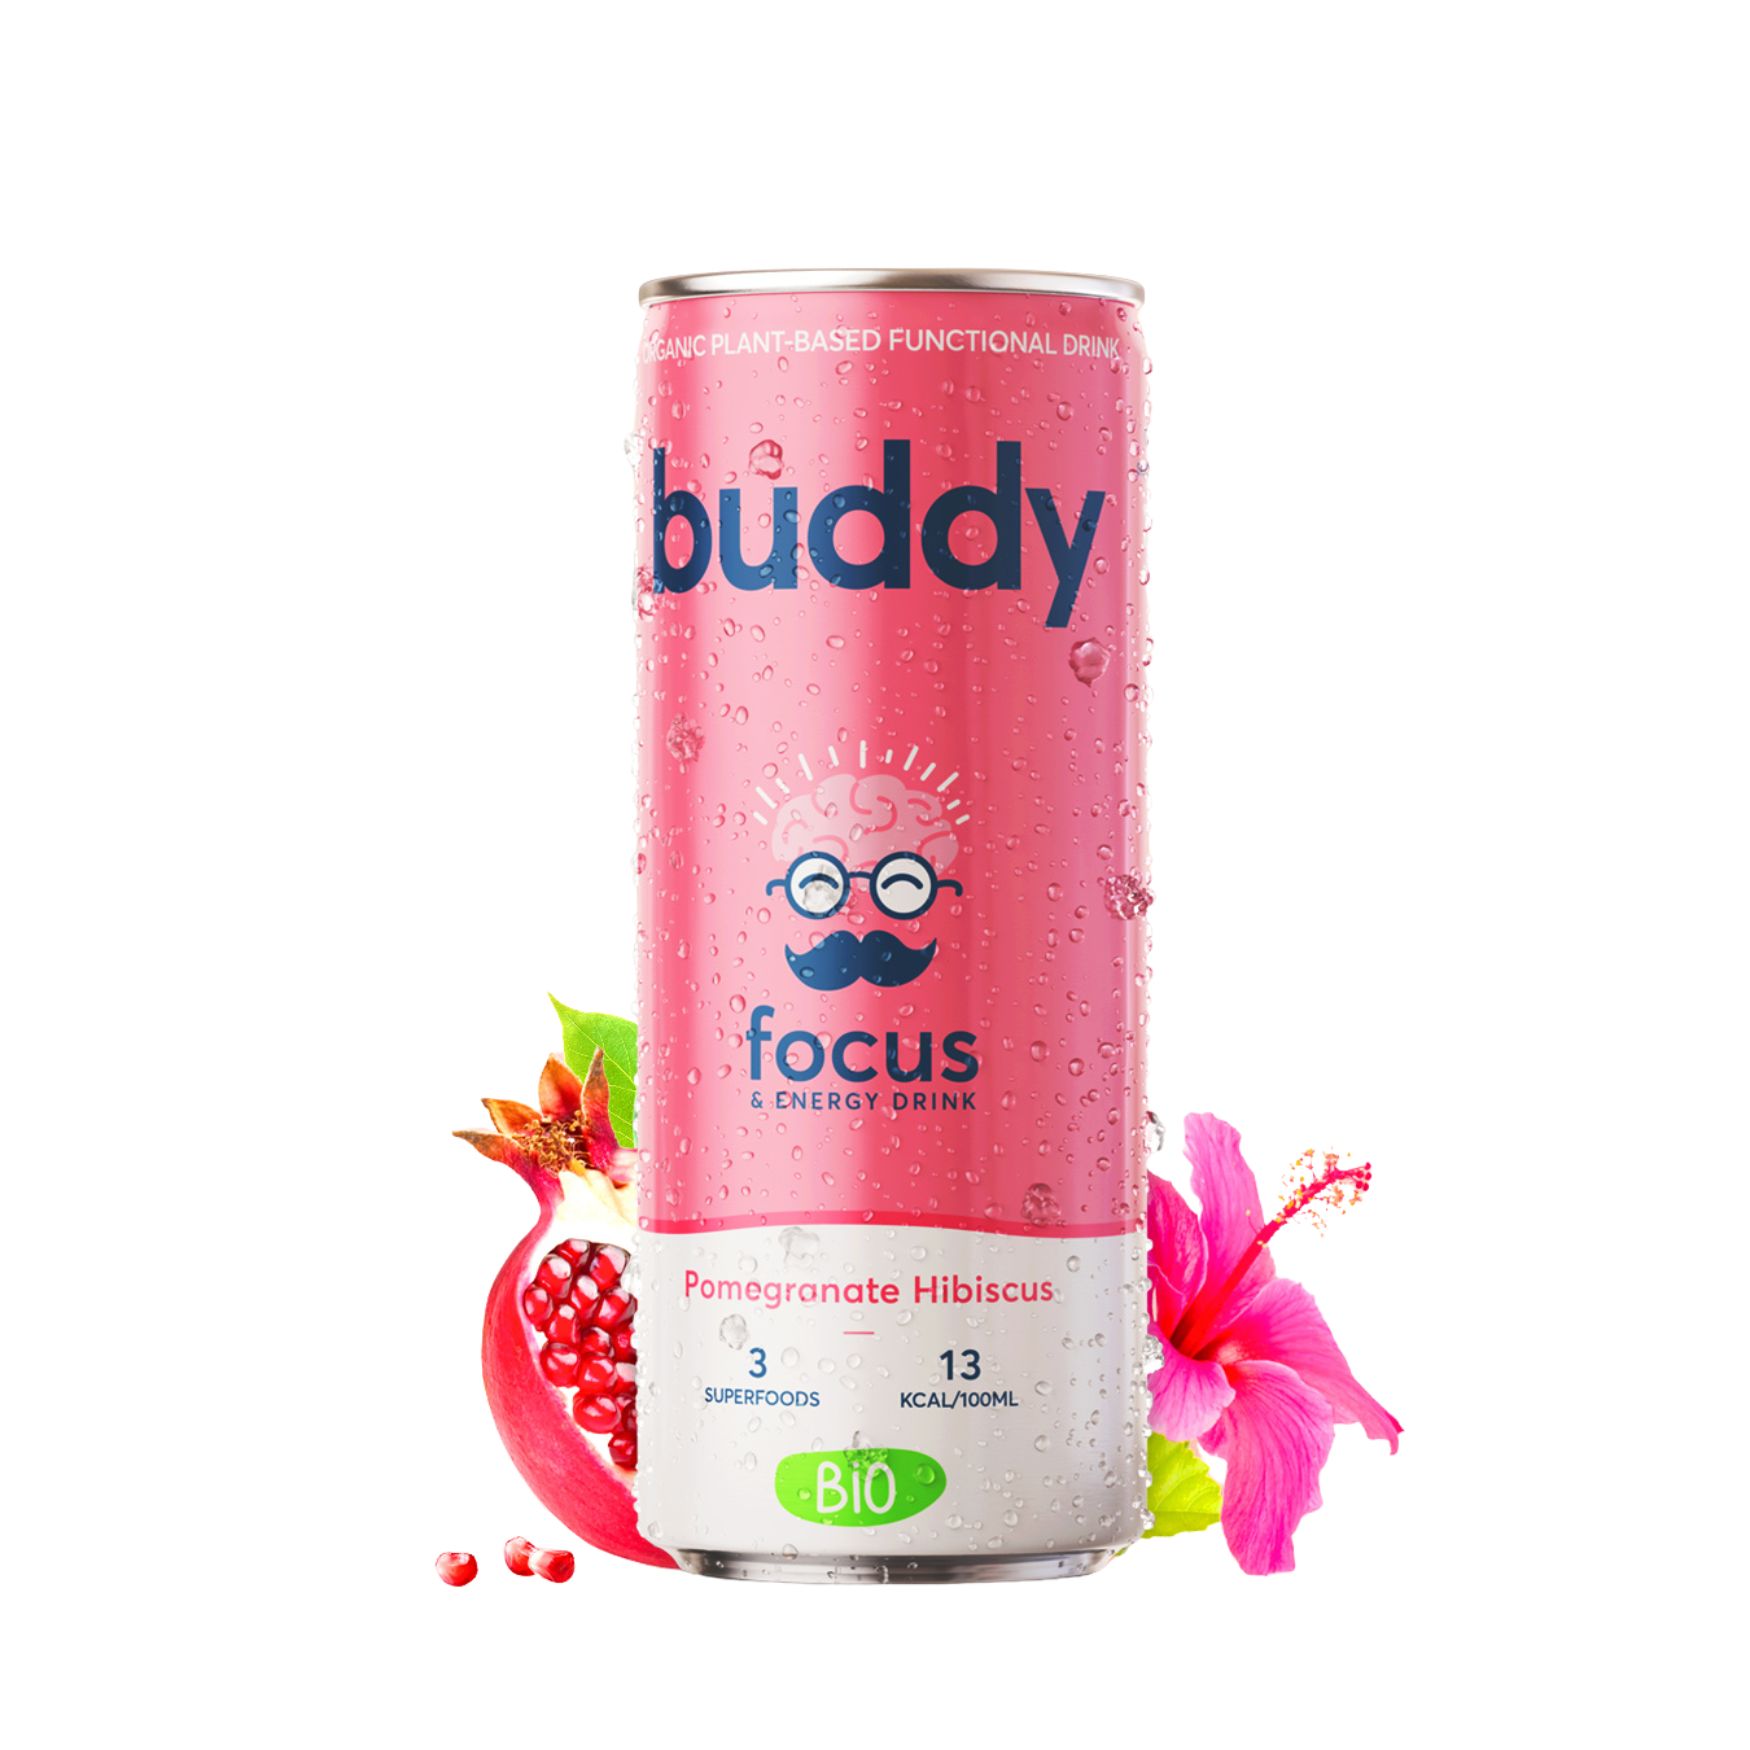 BUDDY bio drink grenade hibiscus 24x250ml*